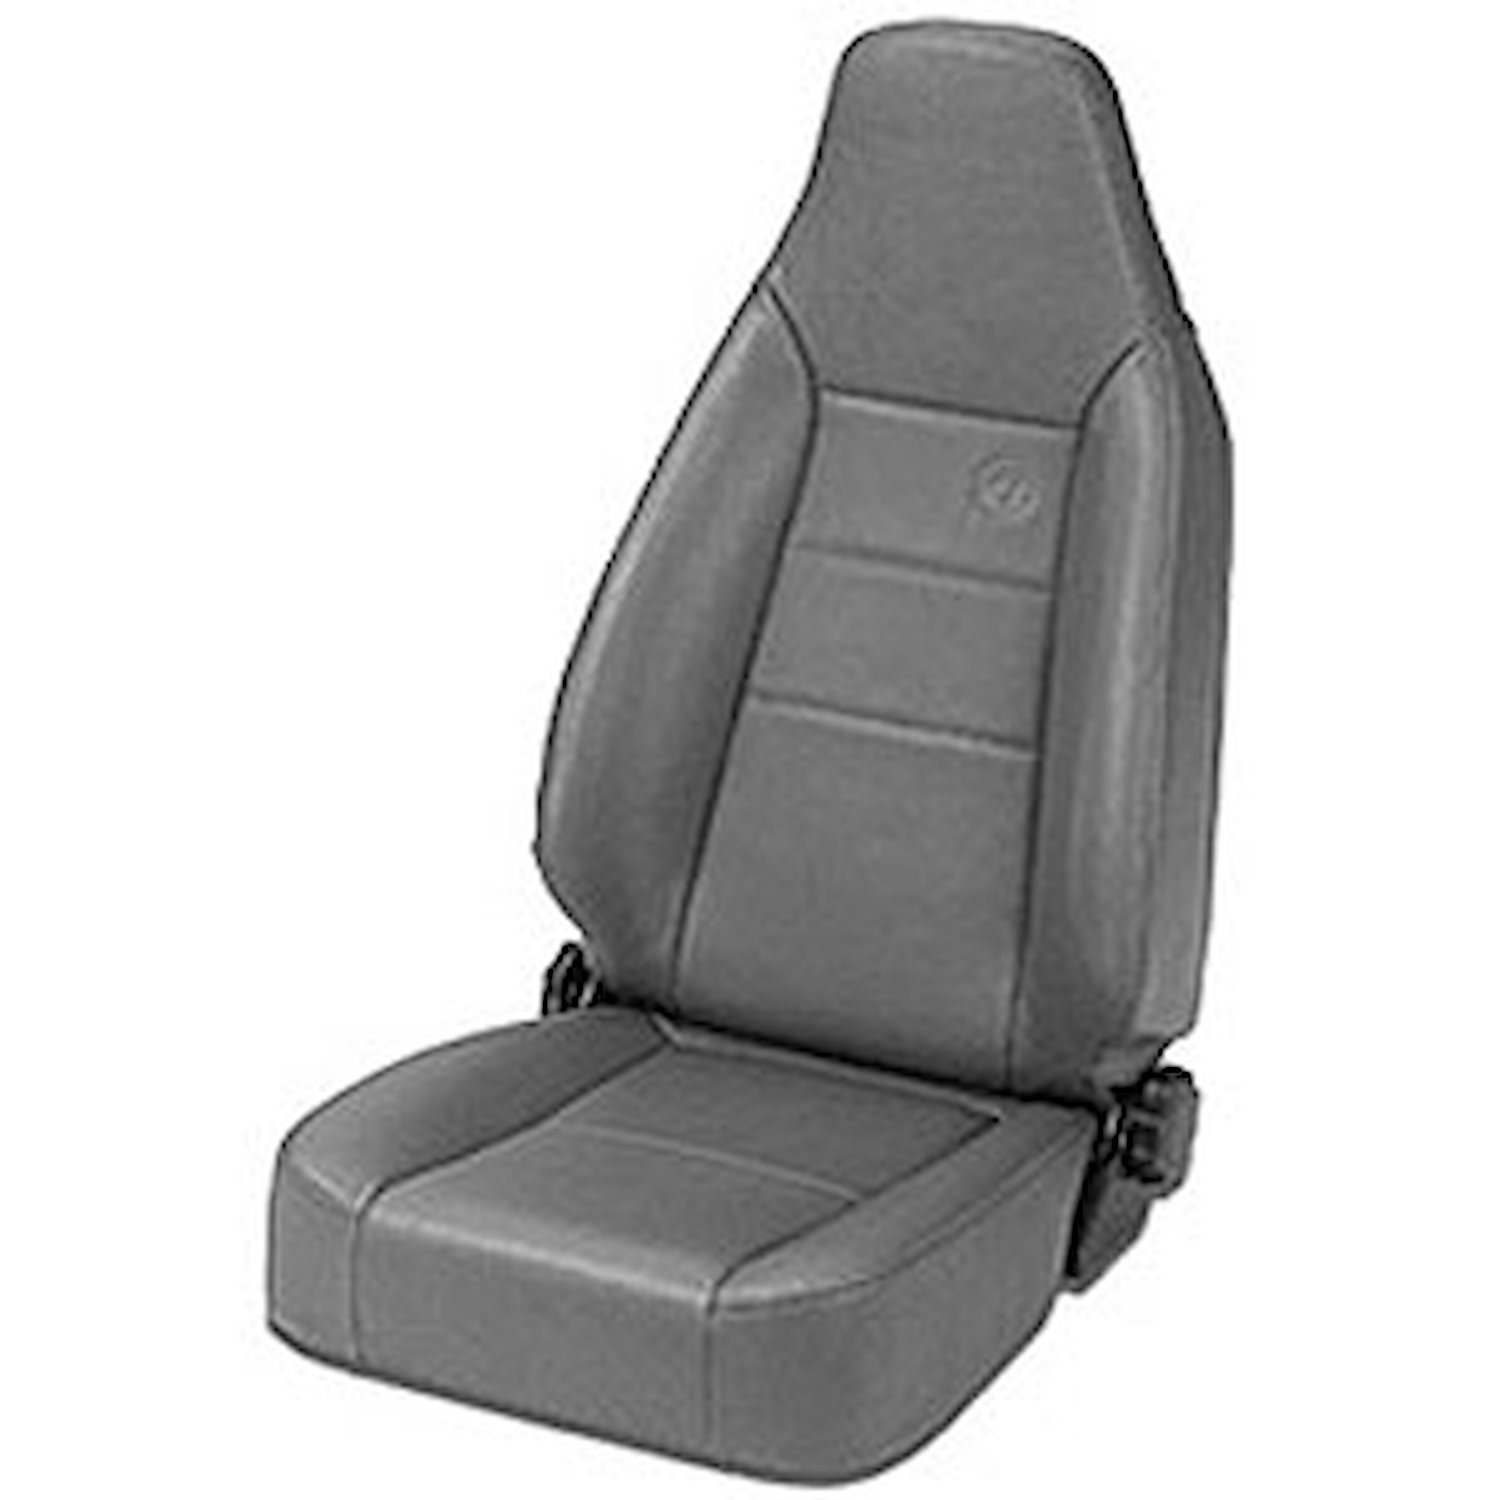 Trailmax II Sport Seat, Charcoal, Front, High-Back, Vinyl, Bucket, Driver Or Passenger Side